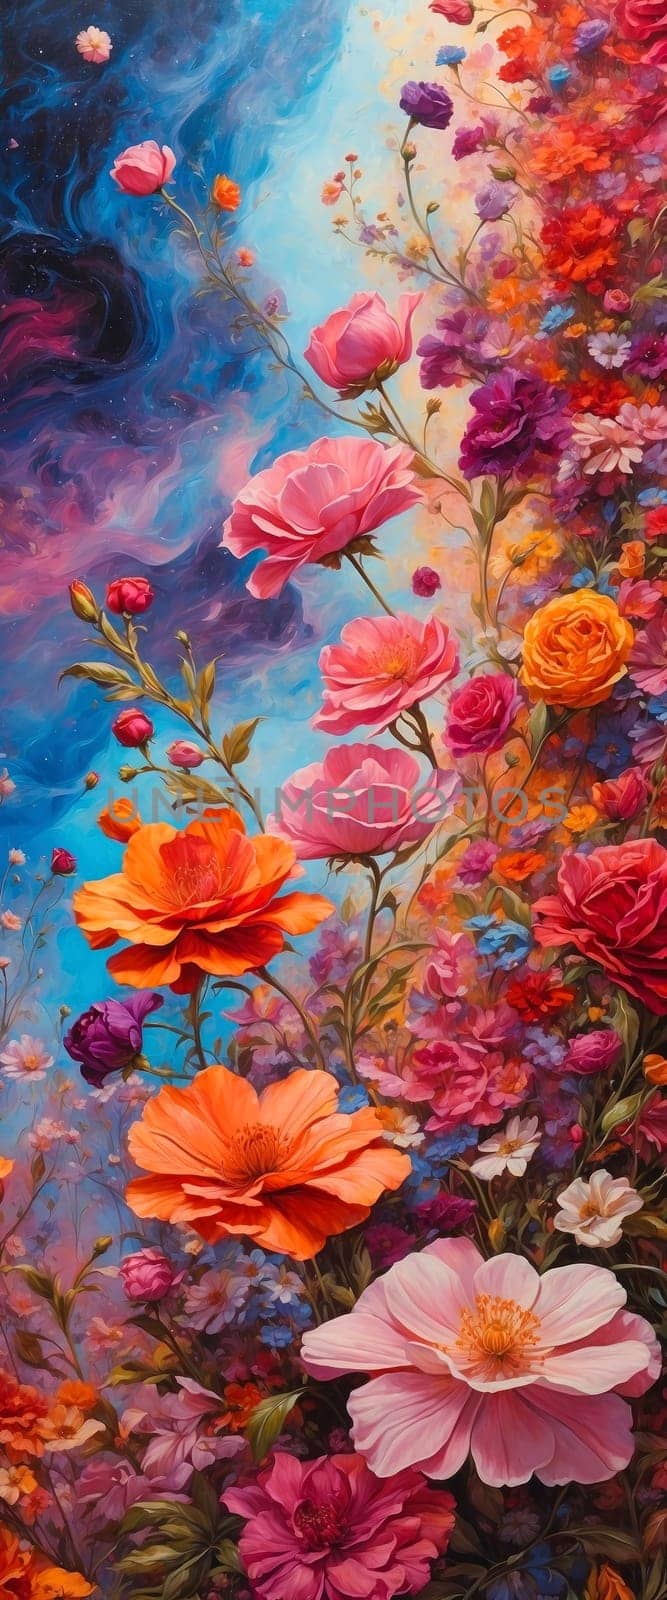 Beautiful flowers painted in watercolor by applesstock